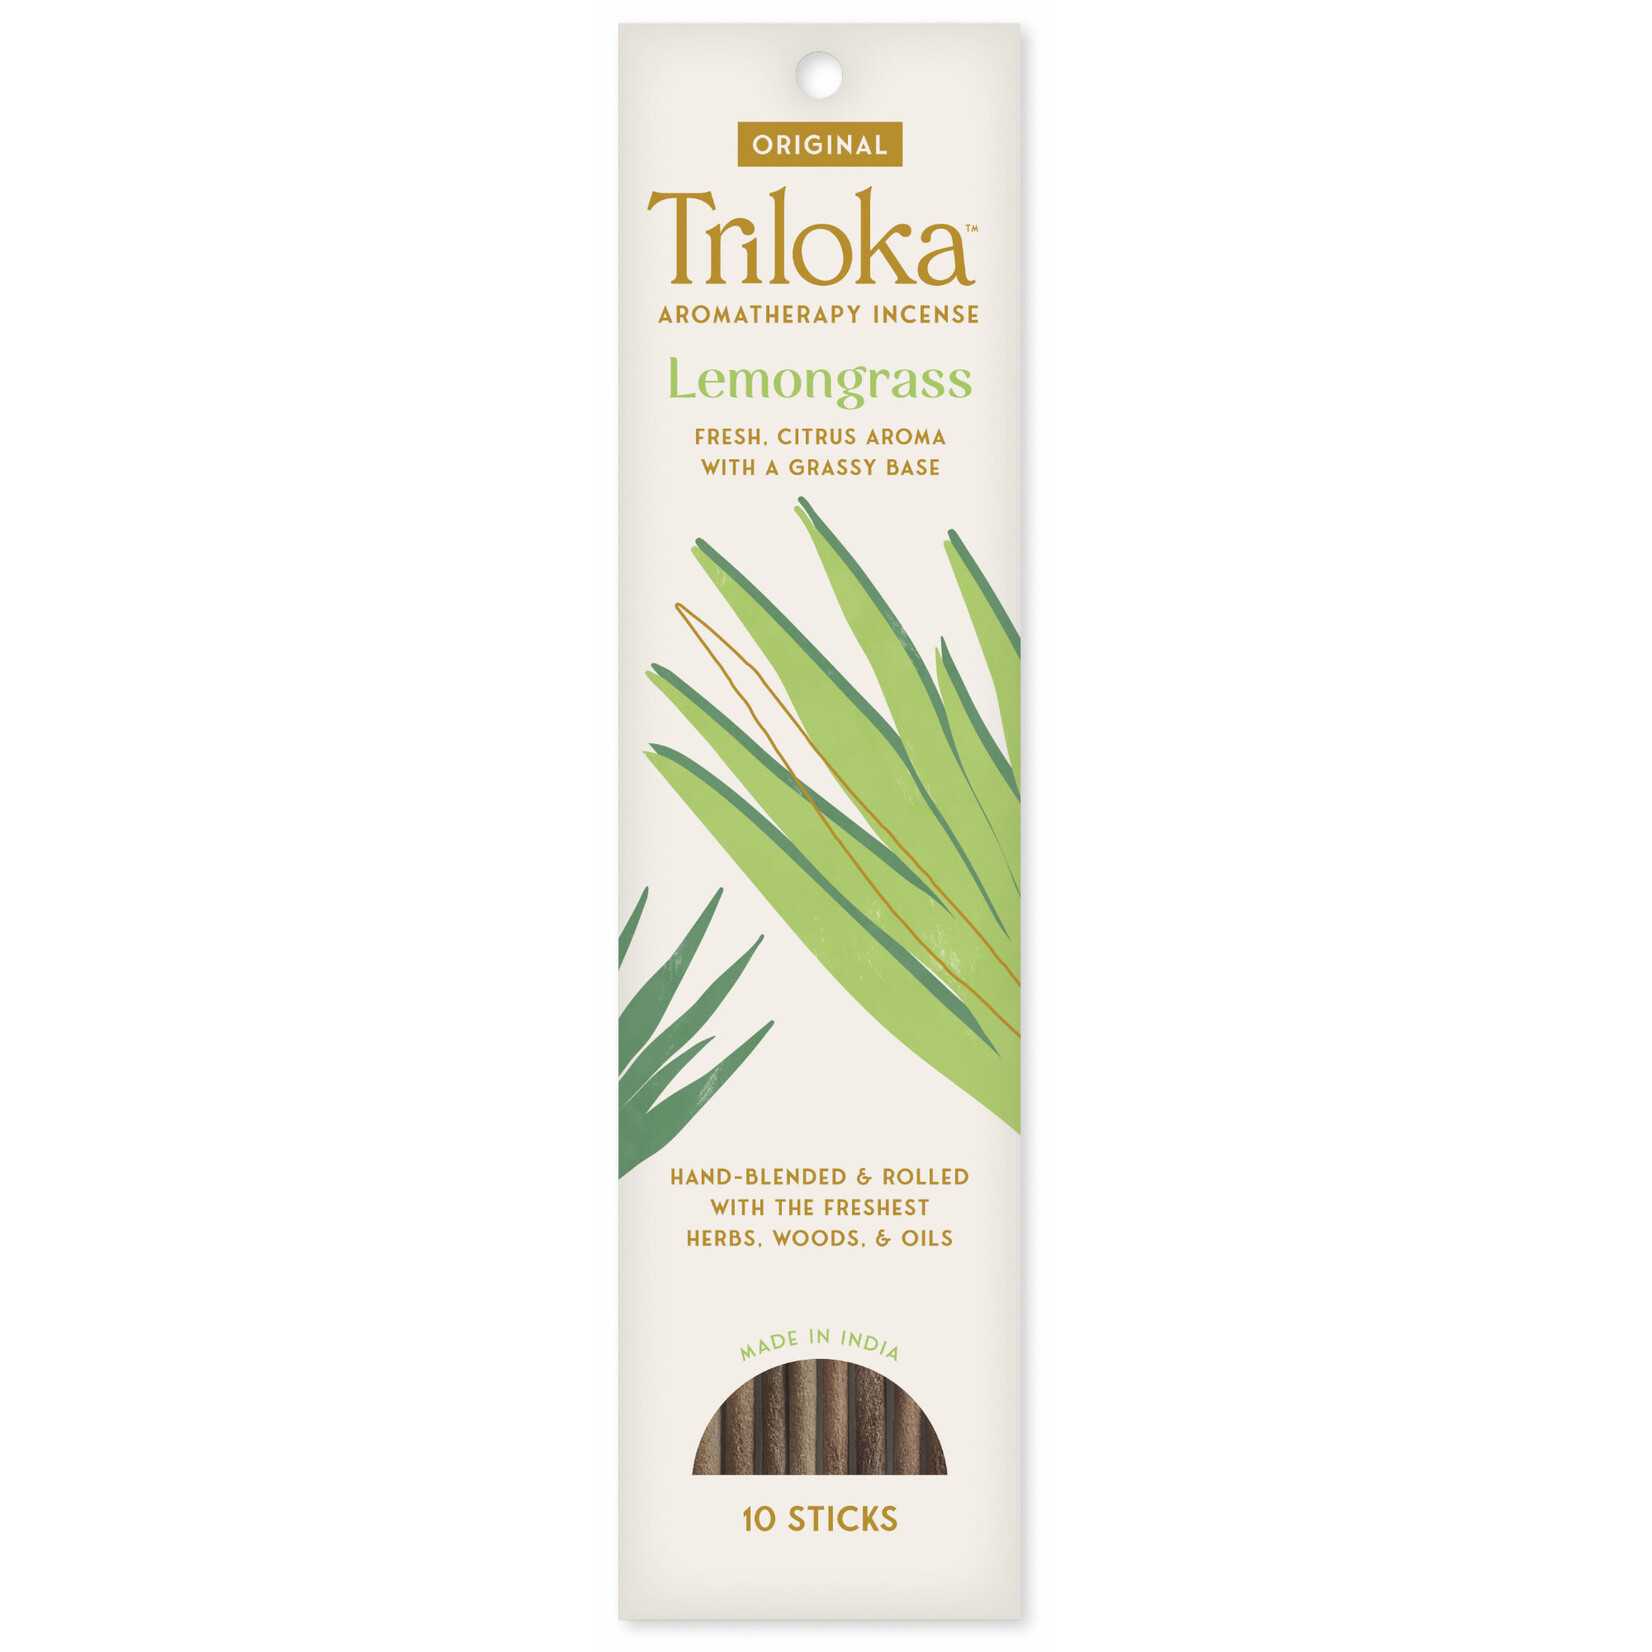 Triloka Aromatherapy Incense Lemongrass Incense